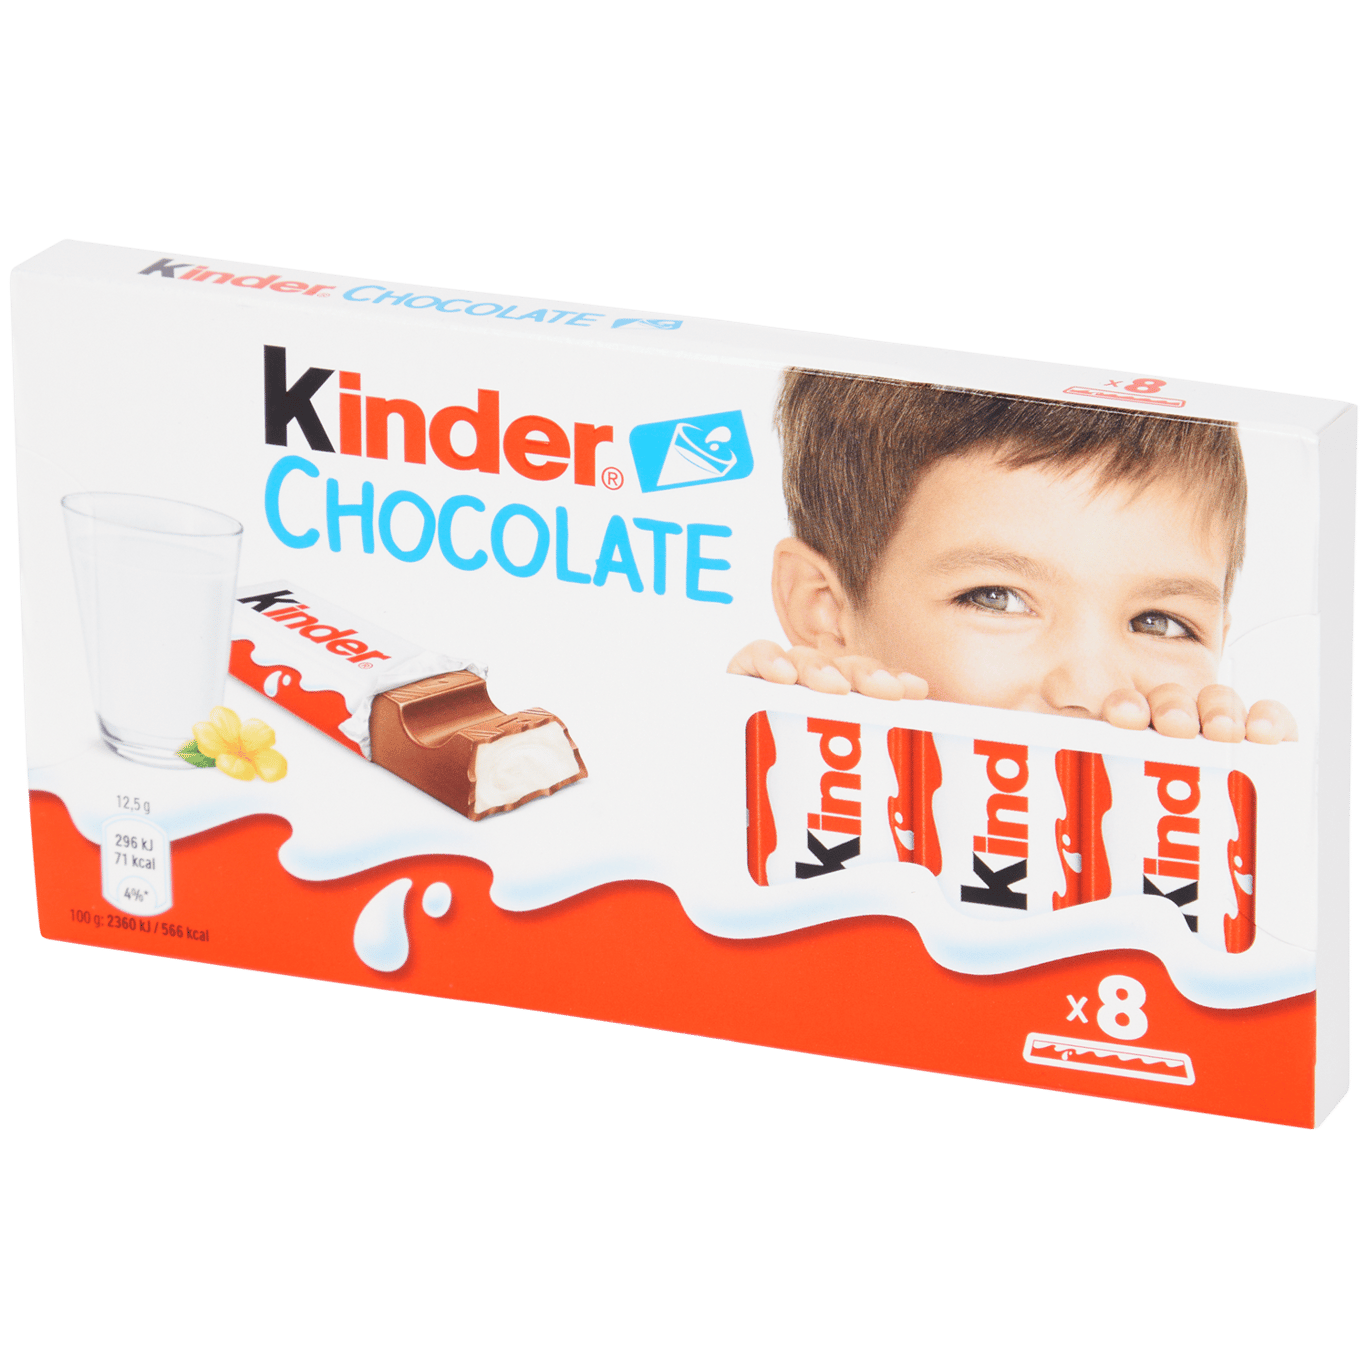 Chocolate Kinder